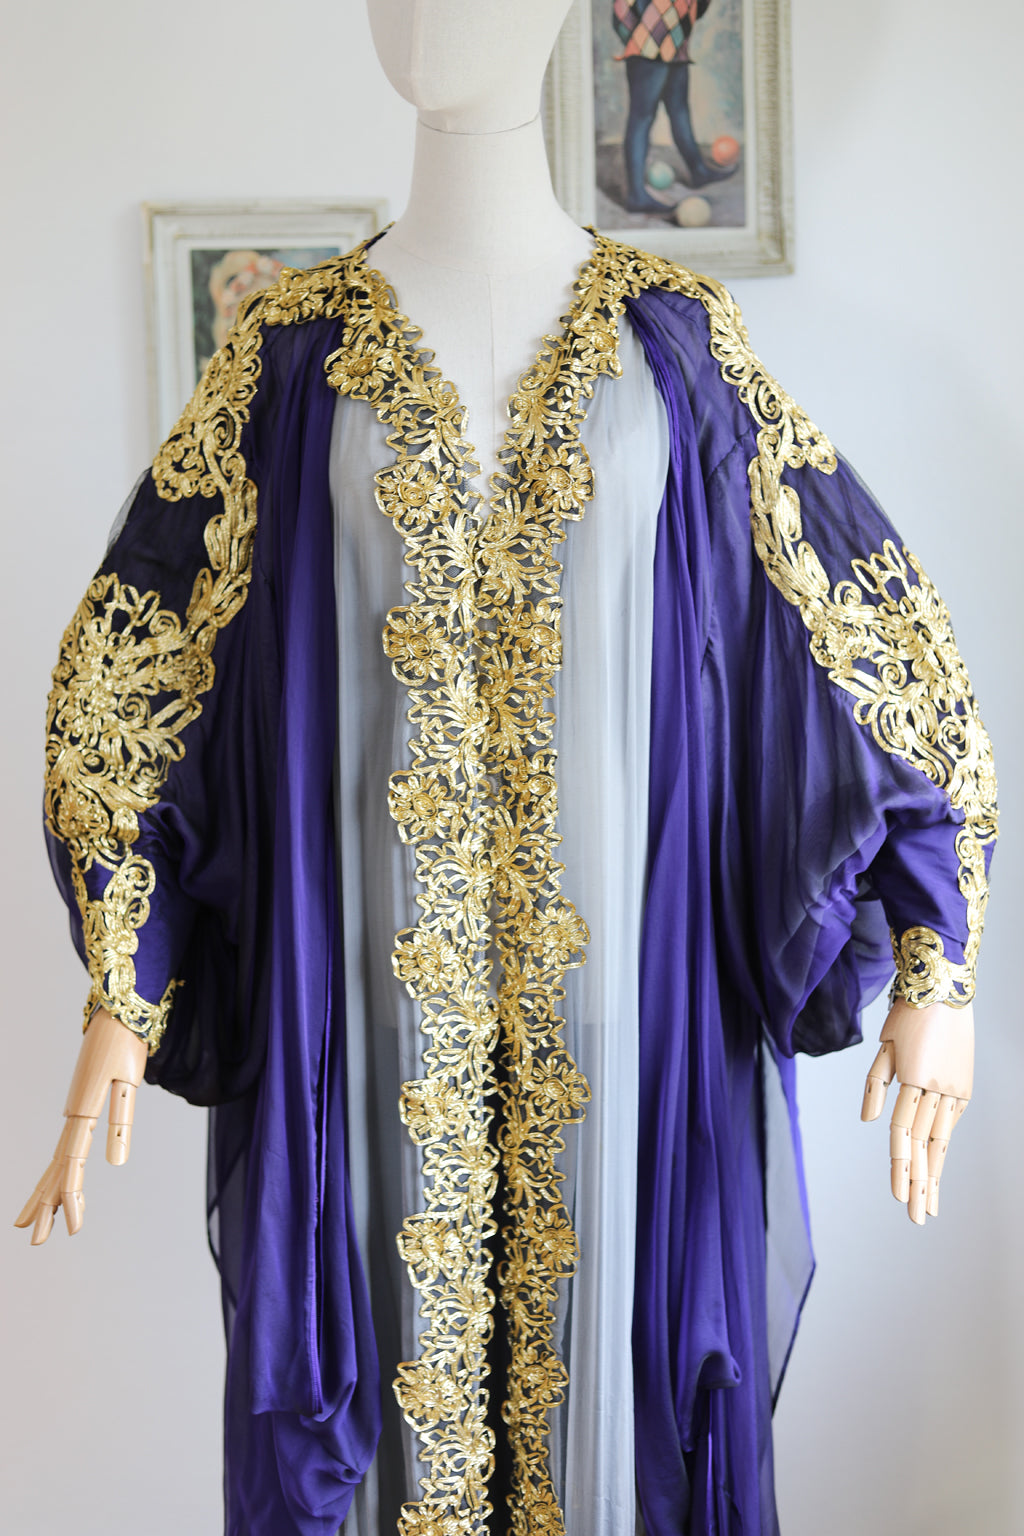 Vintage 1970s Diva's Custom Cape - MESMERIZING Wizard Purple + Smoke Chiffon + Gold Metallic Soutache Cloak Jacket Duster w MASSIVE Bishop Sleeves + Train! Fits Most